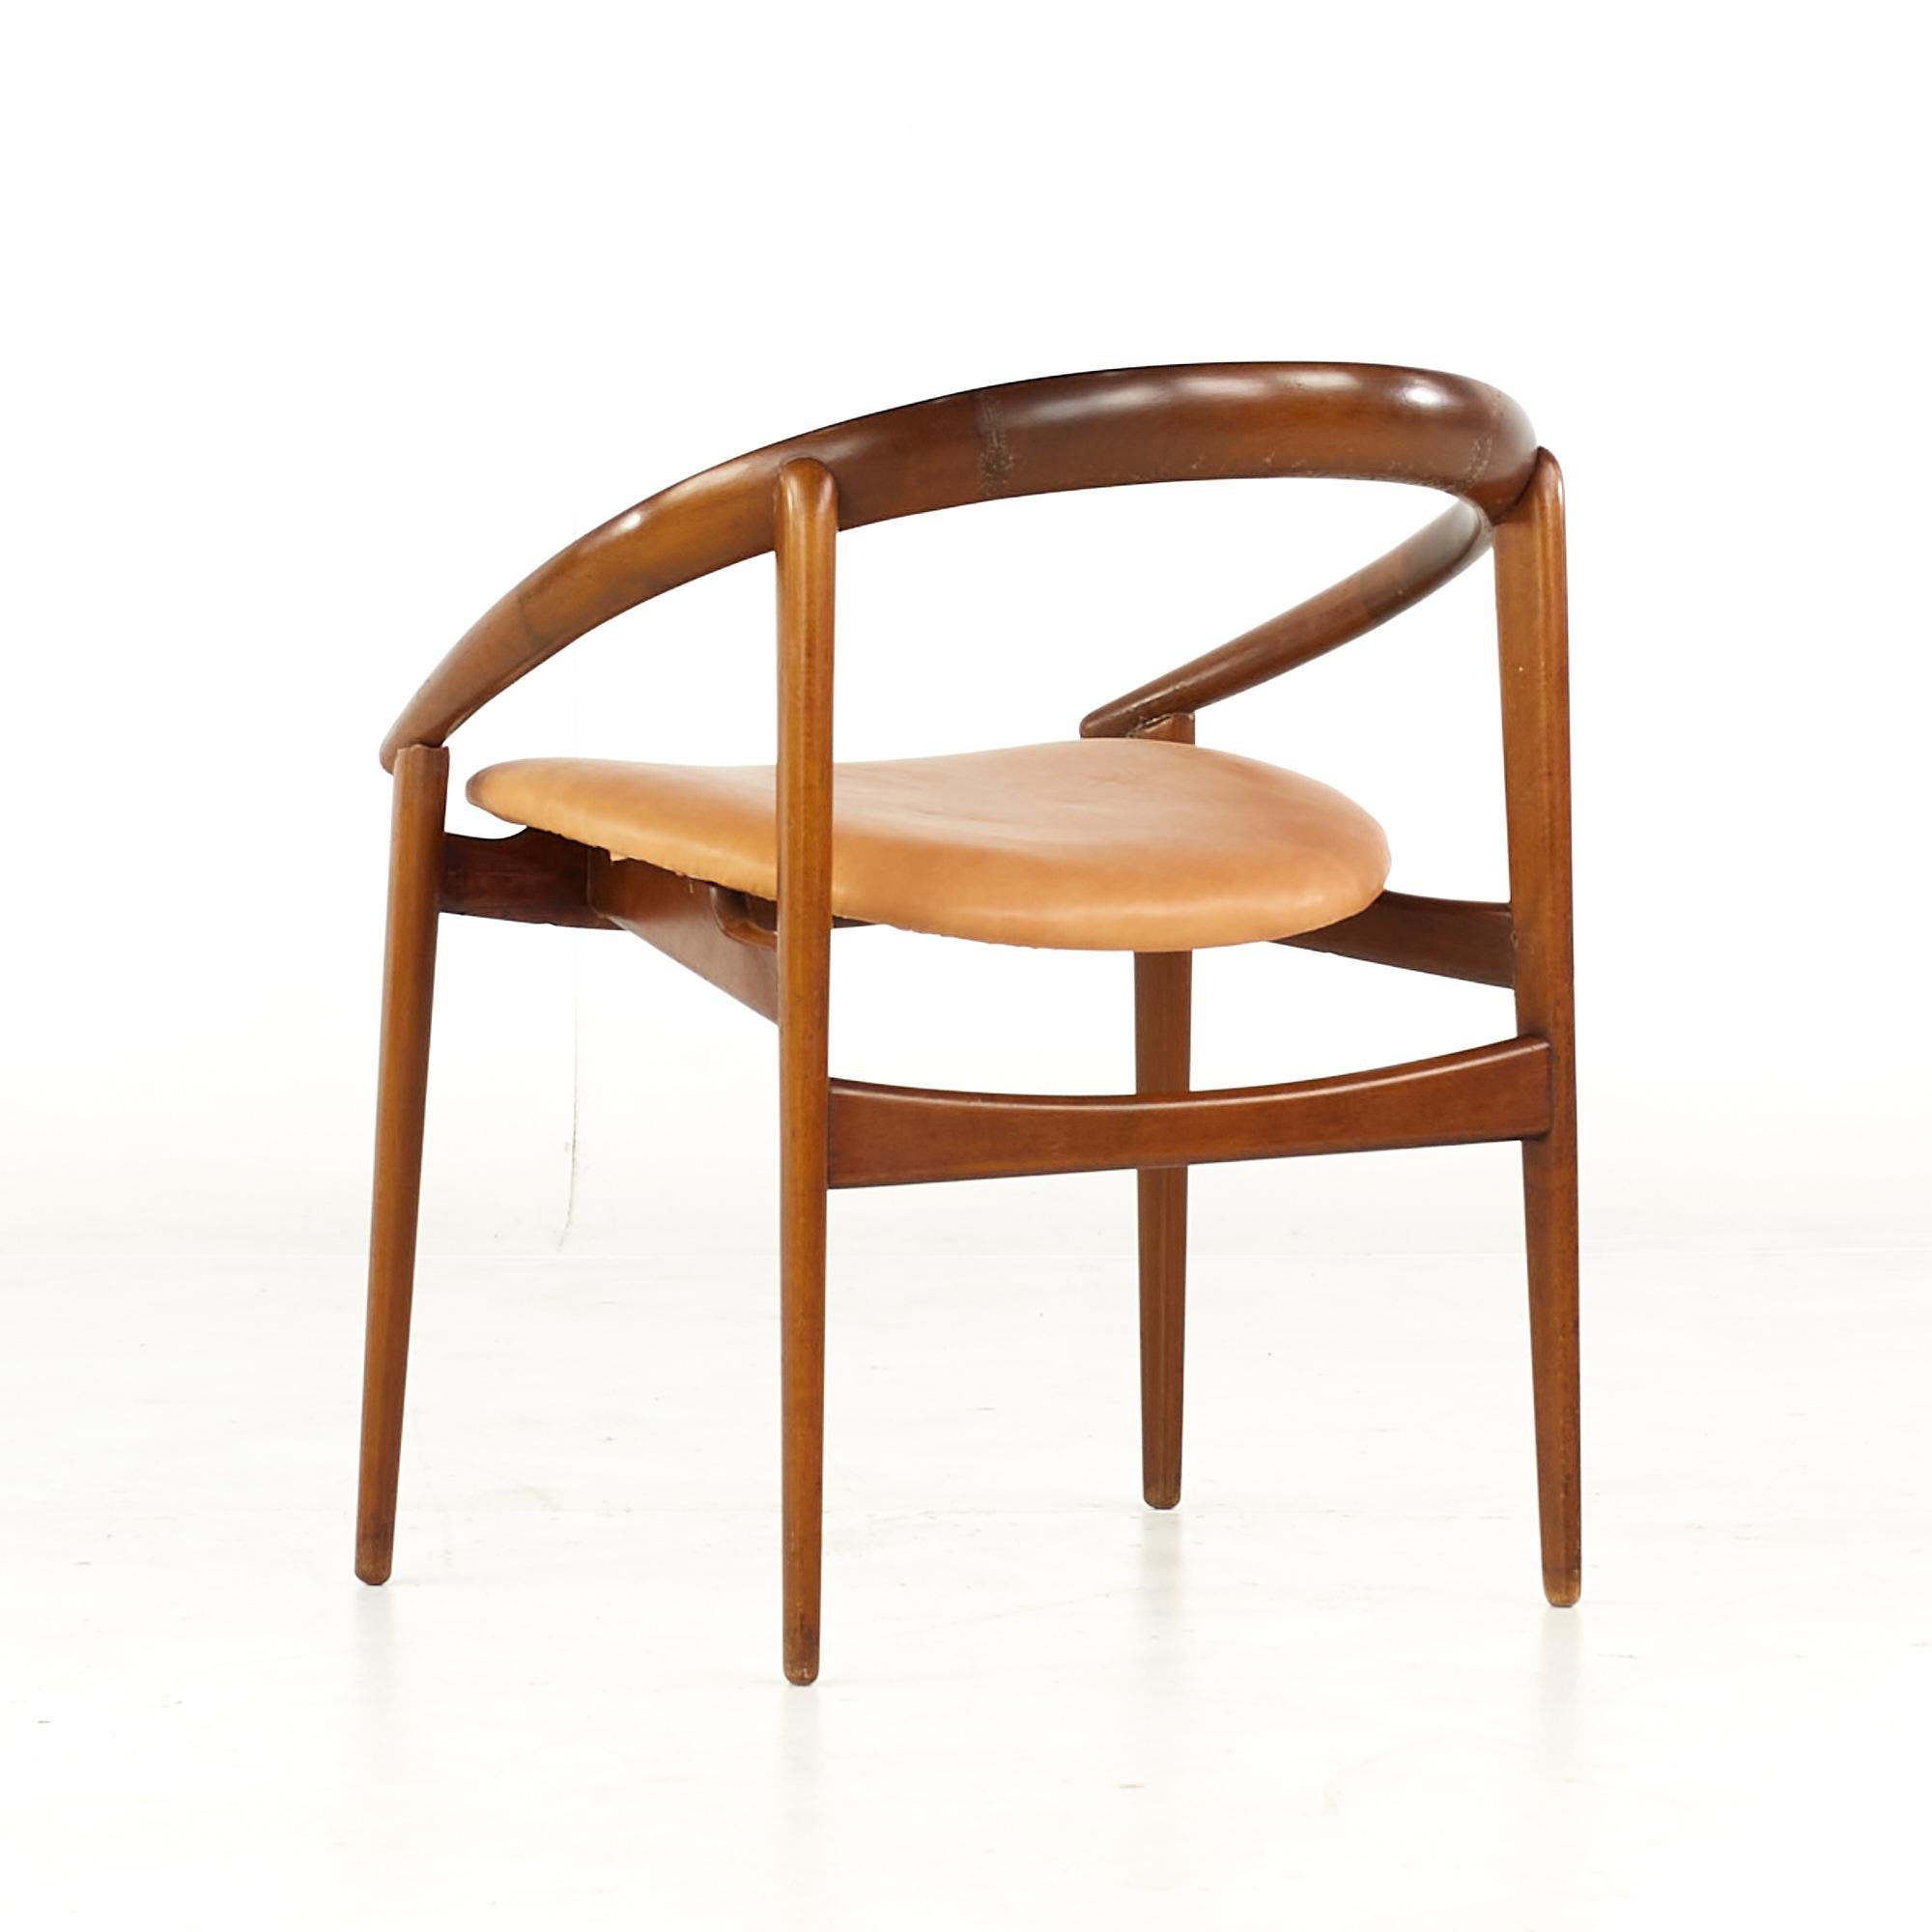 H Brockmann Petersen for Louis G Thiersen MCM Teak Horseshoe Chairs, Pair For Sale 2